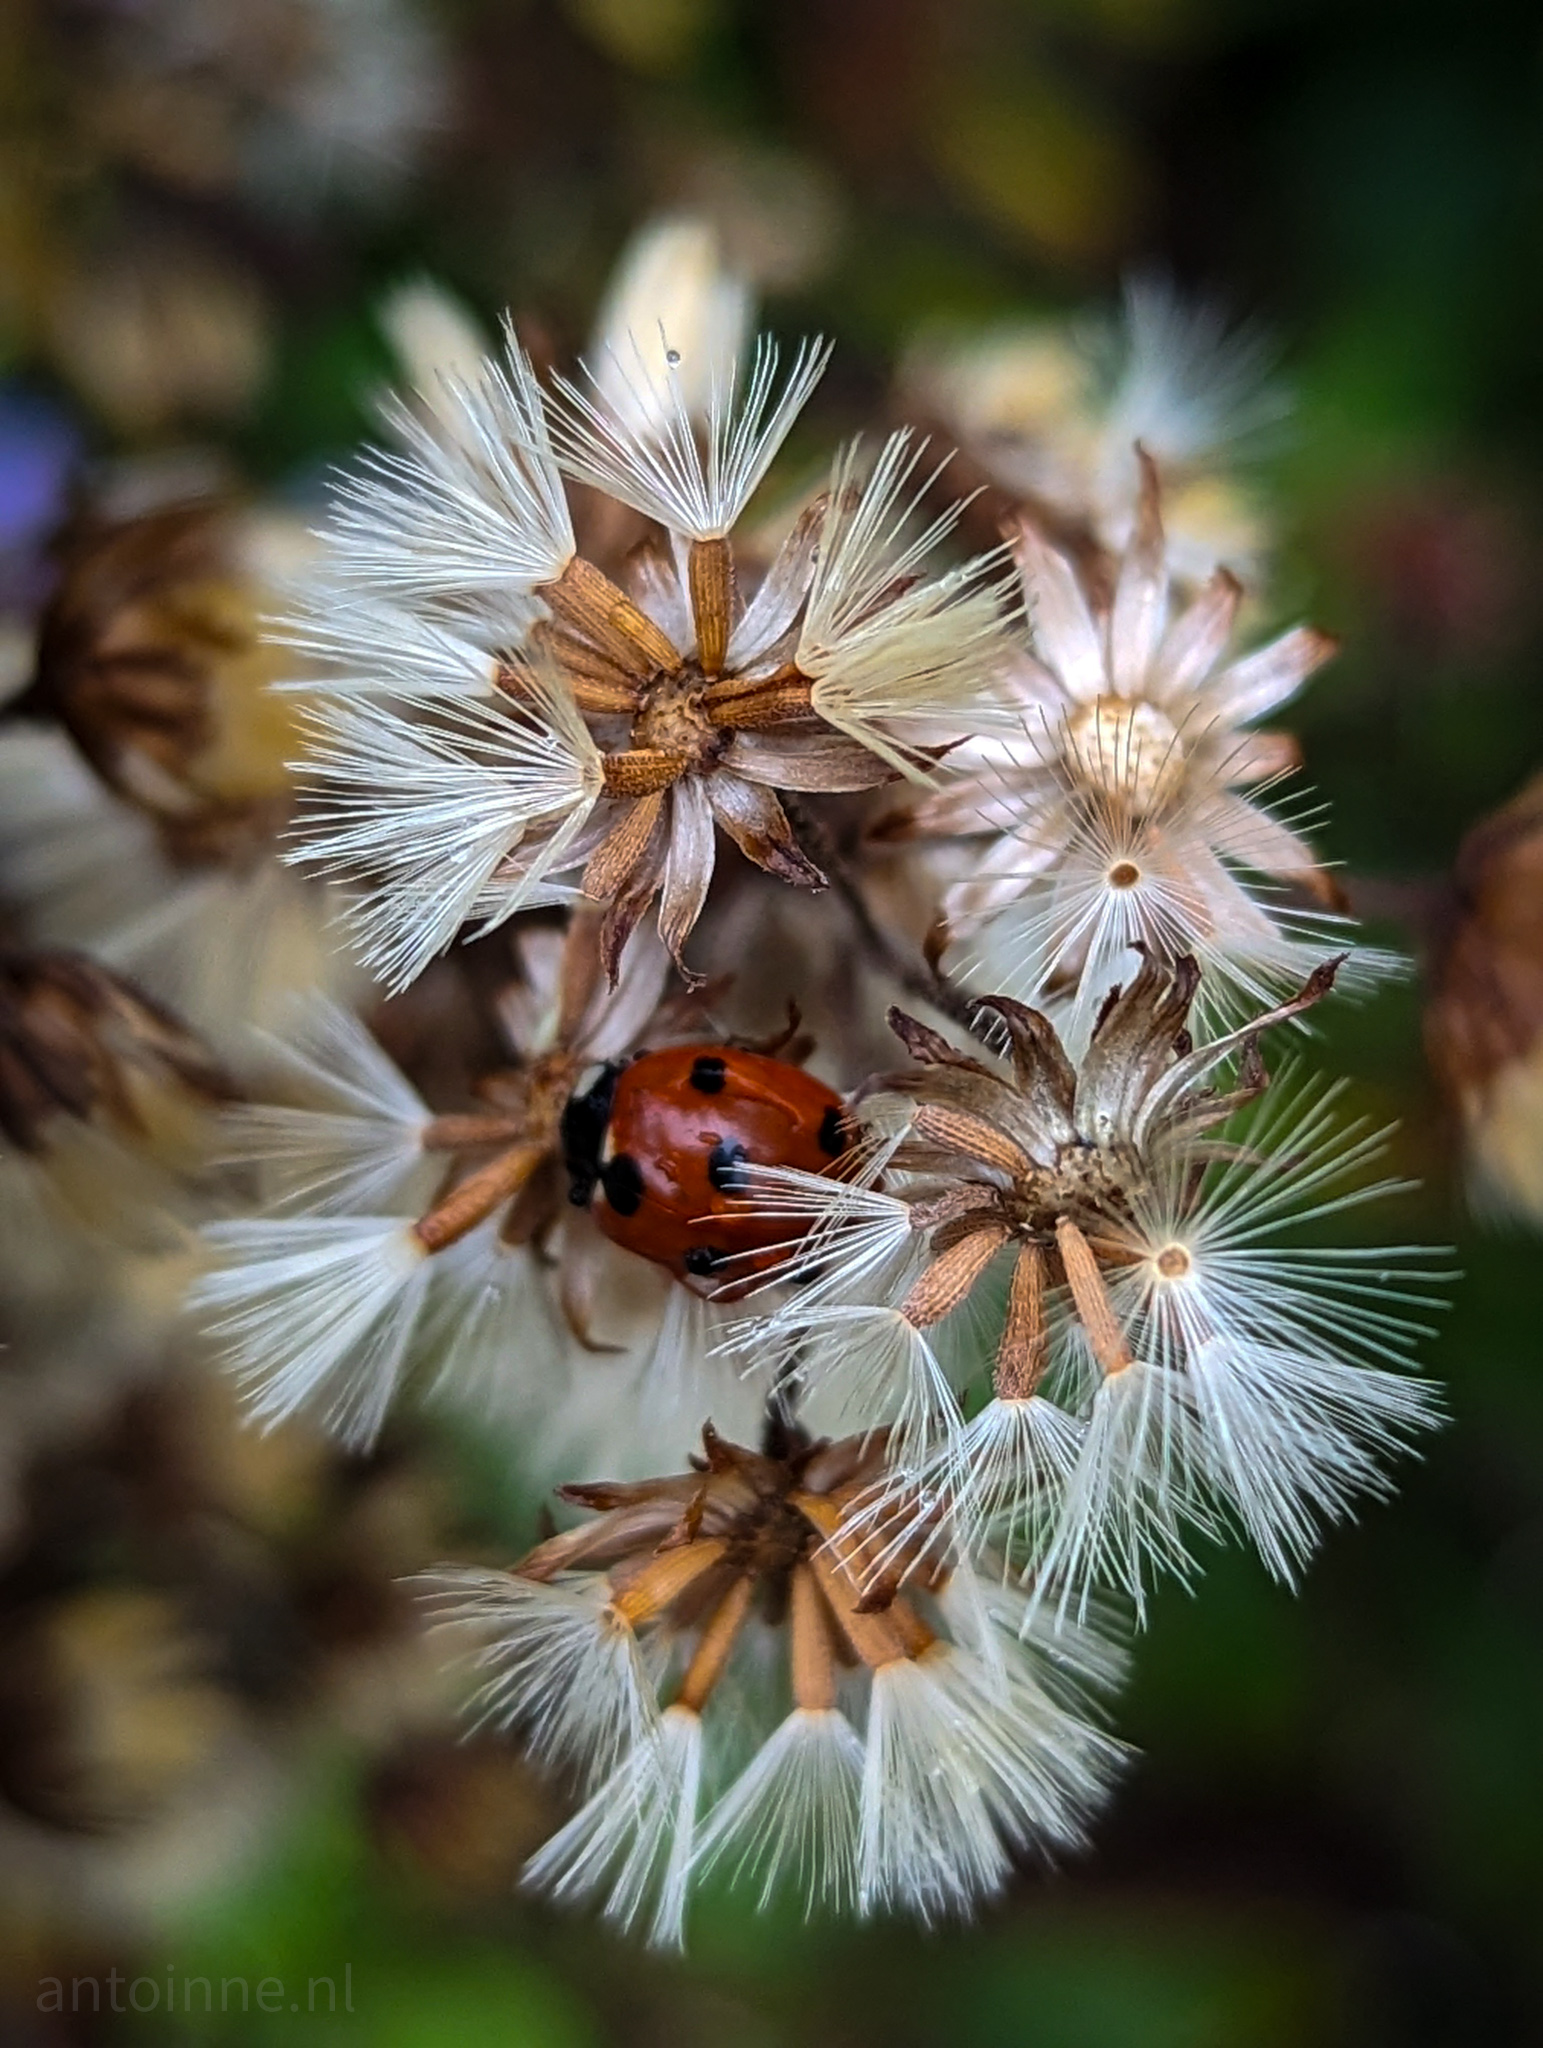 Ladybug in hiding